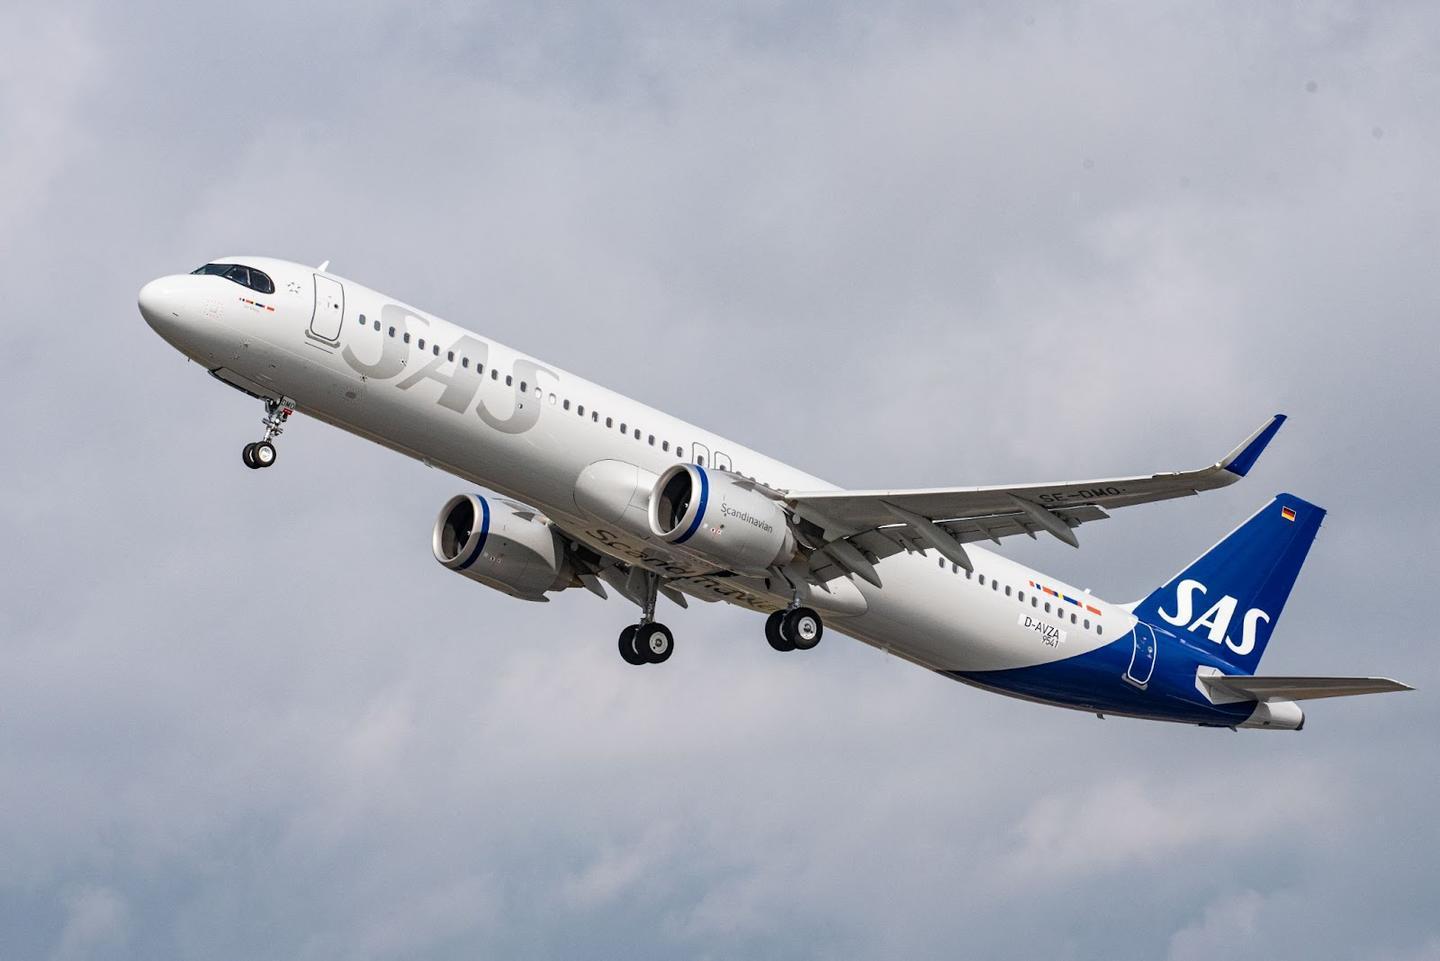 Digital Alliance’s Skywise Predictive Maintenance Solution for SAS Scandinavian Airlines